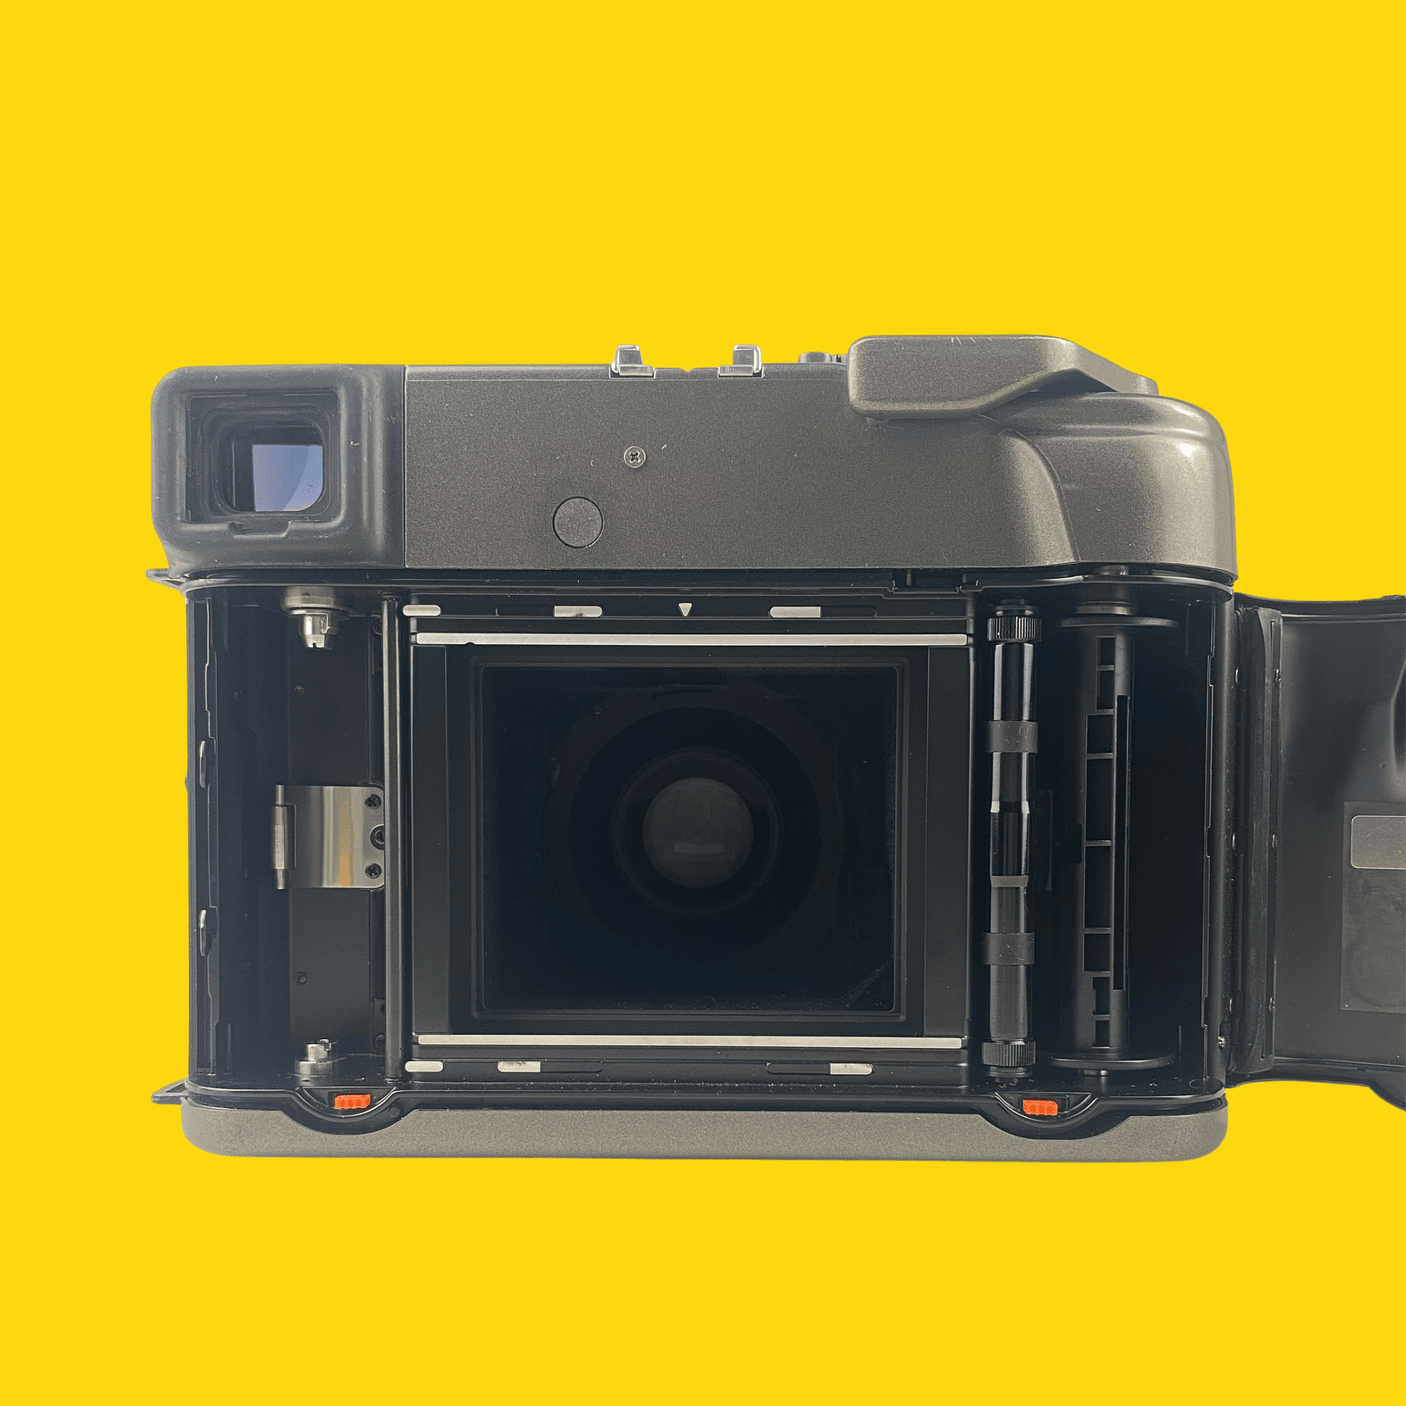 Mamiya 7 With 80mm F4 Lens. 6X7 Medium Format Film Camera